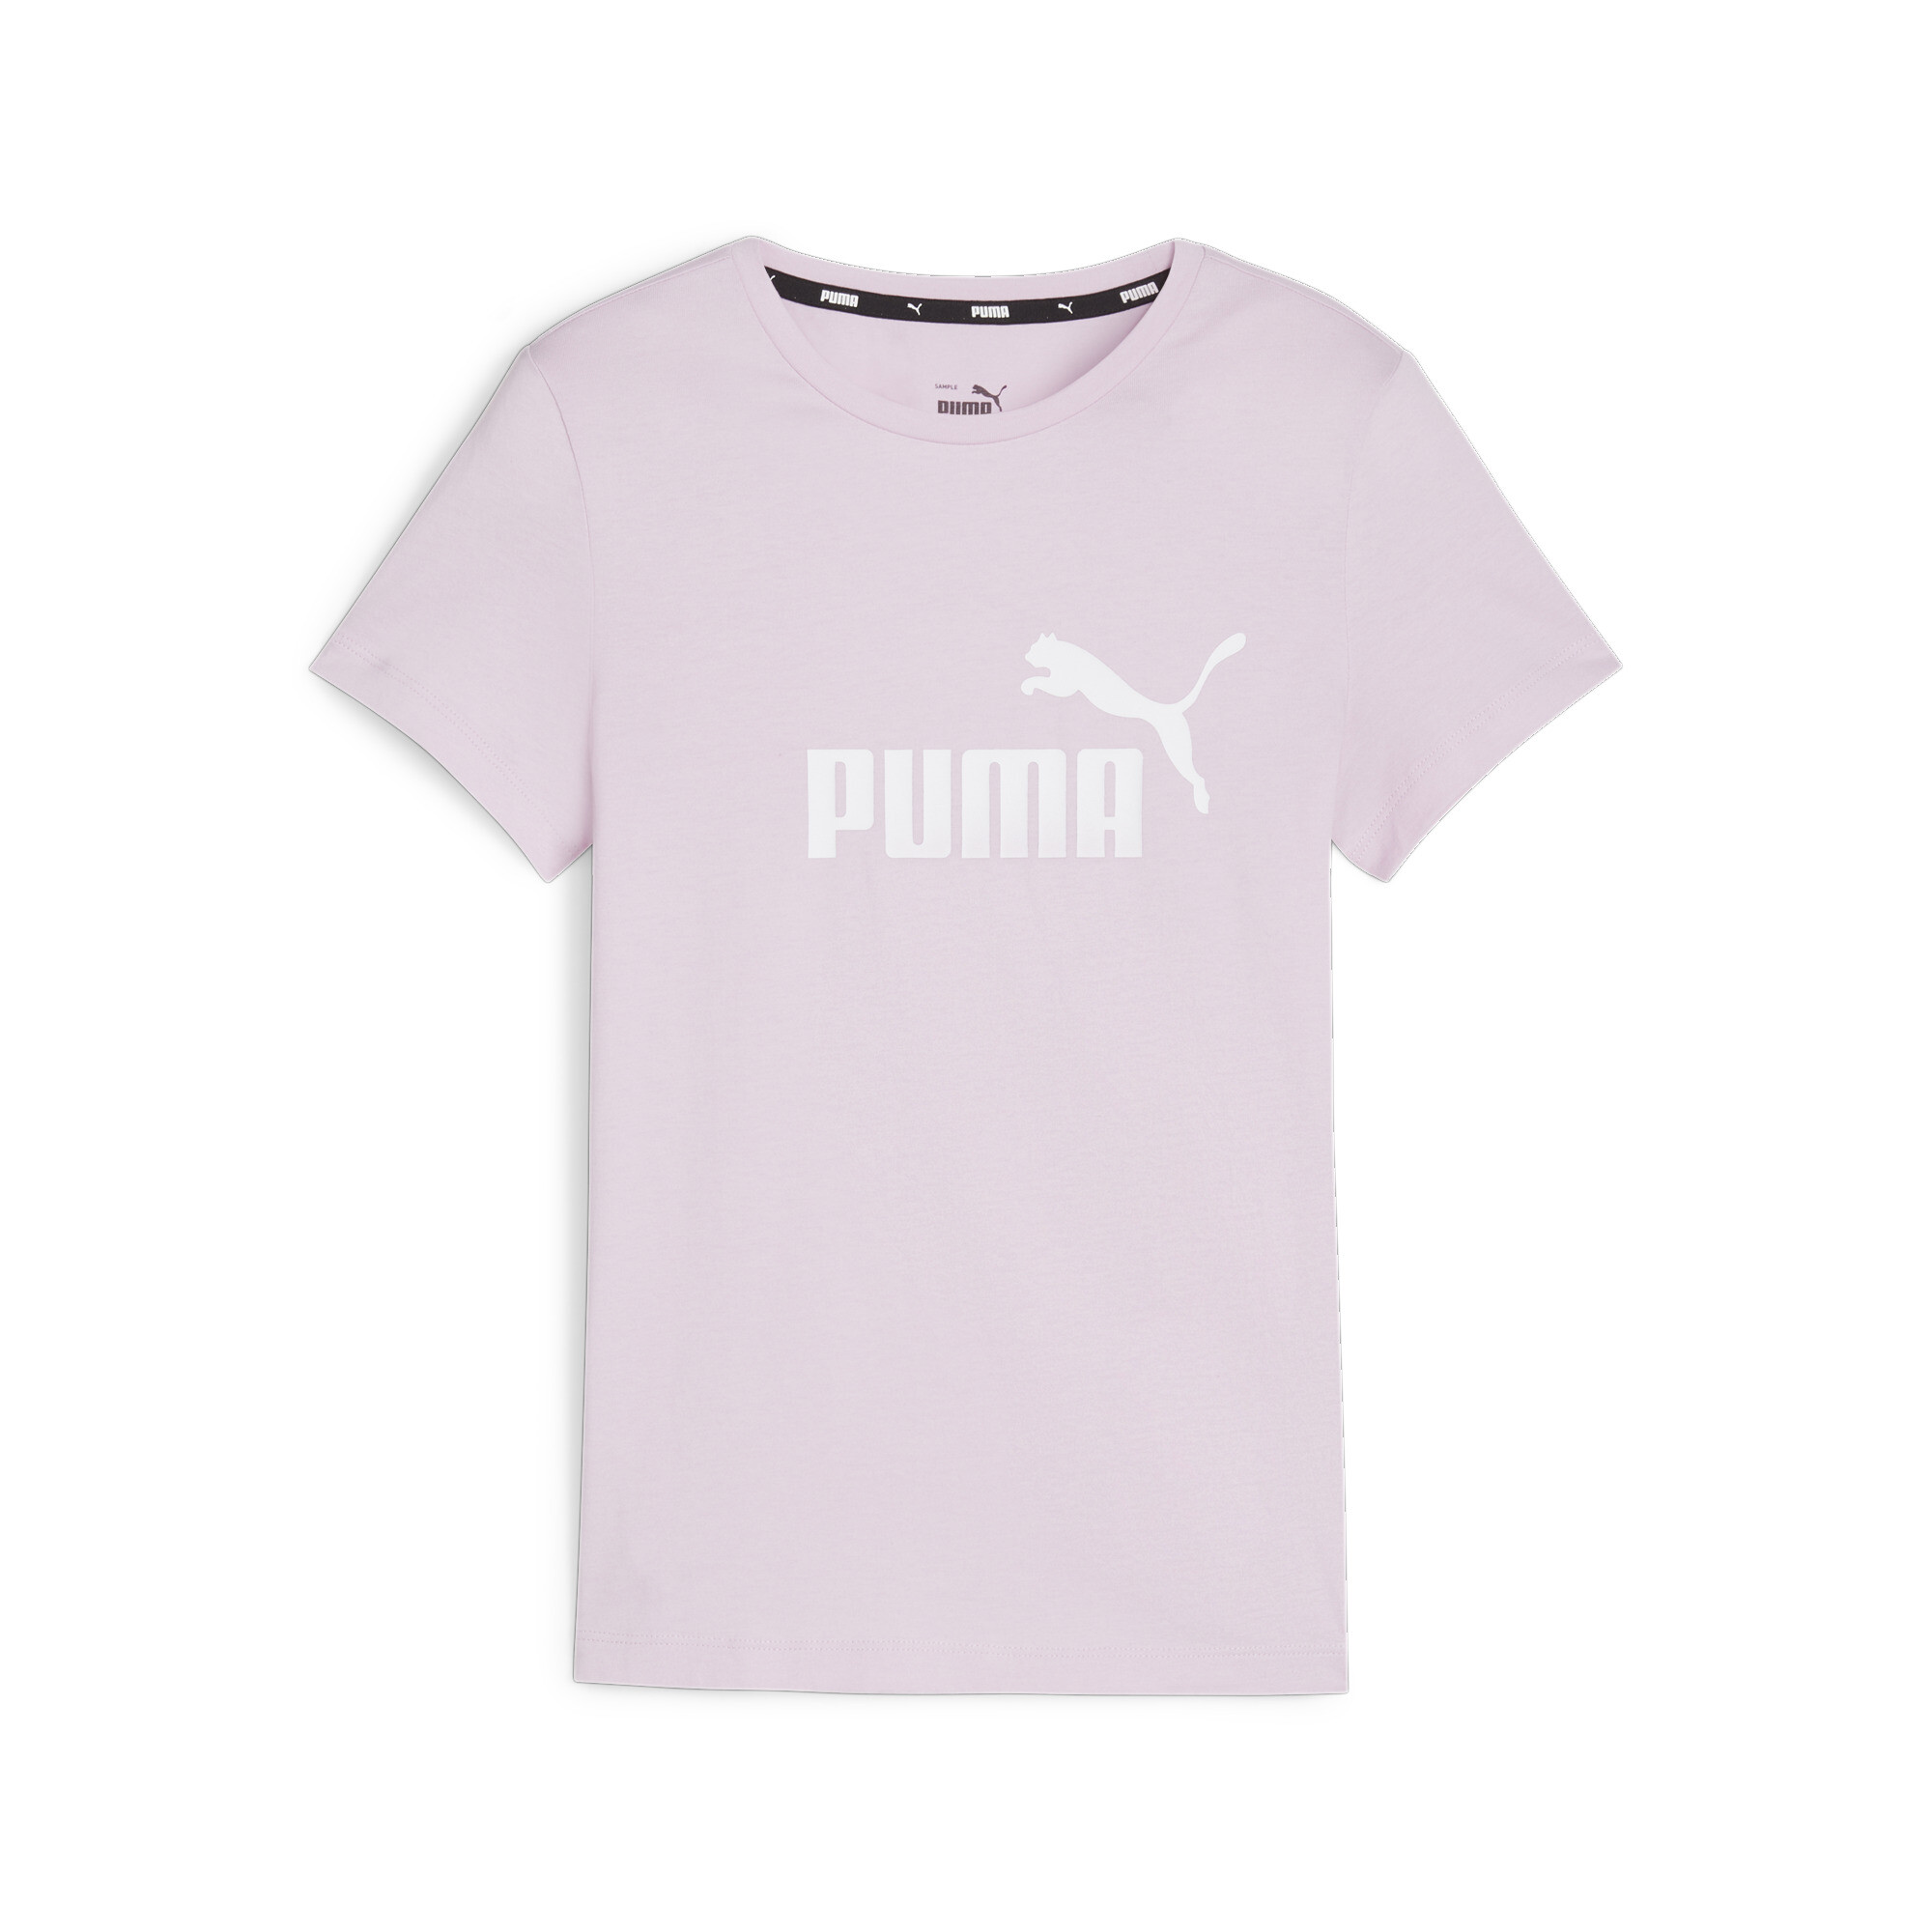 PUMA Essentials Logo T-Shirt In Purple, Size 5-6 Youth